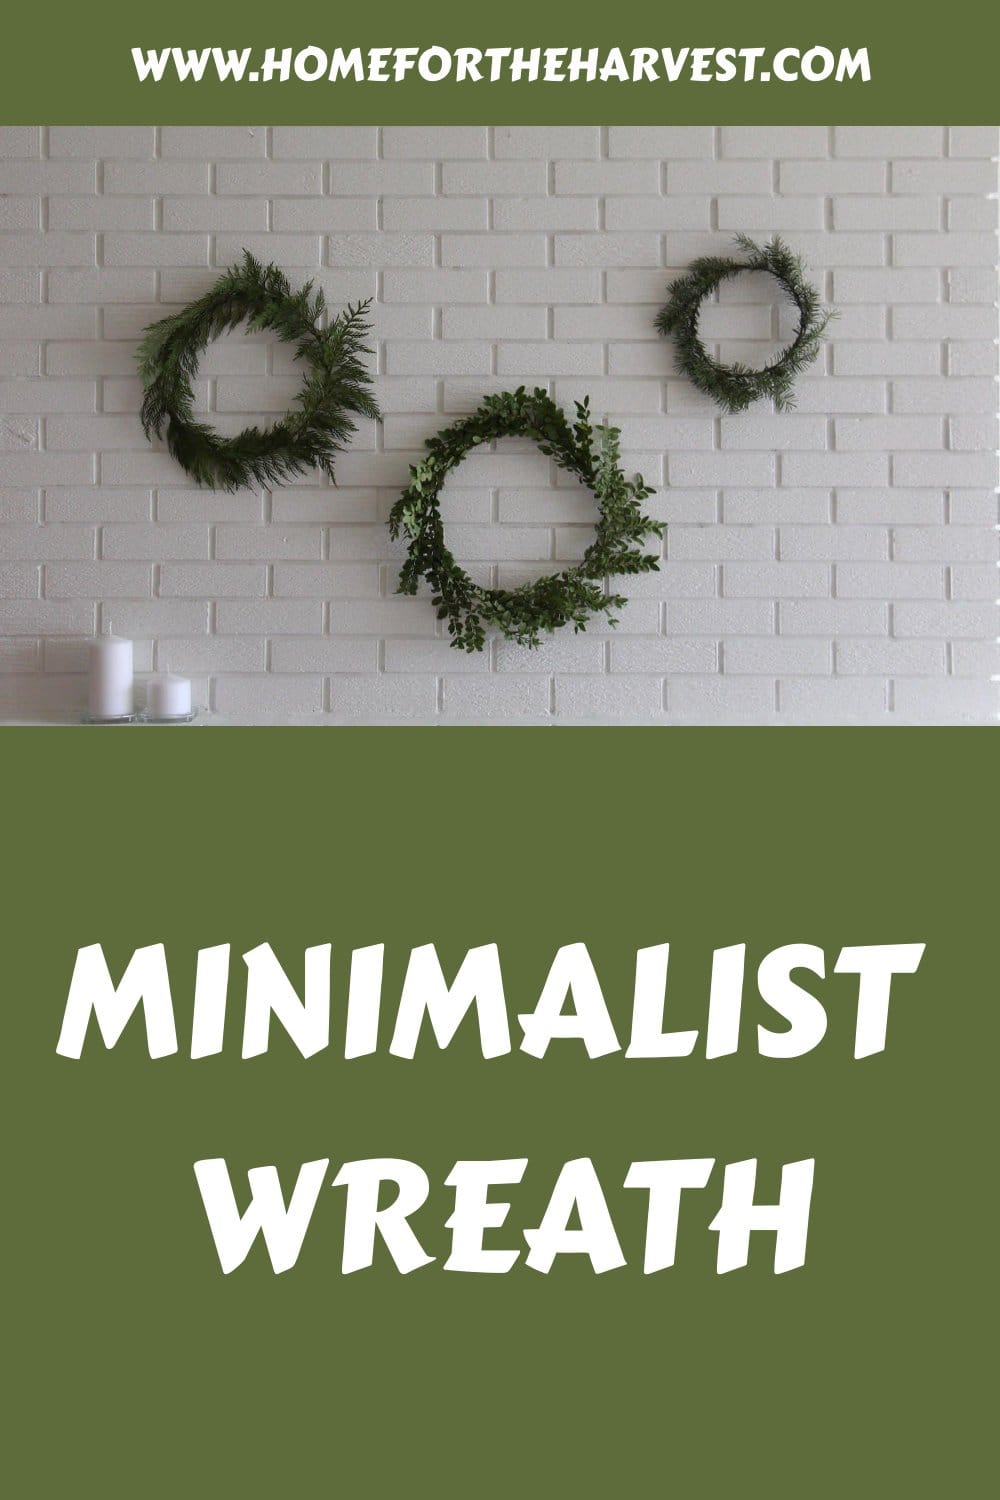 Minimalist wreath generated pin 1191